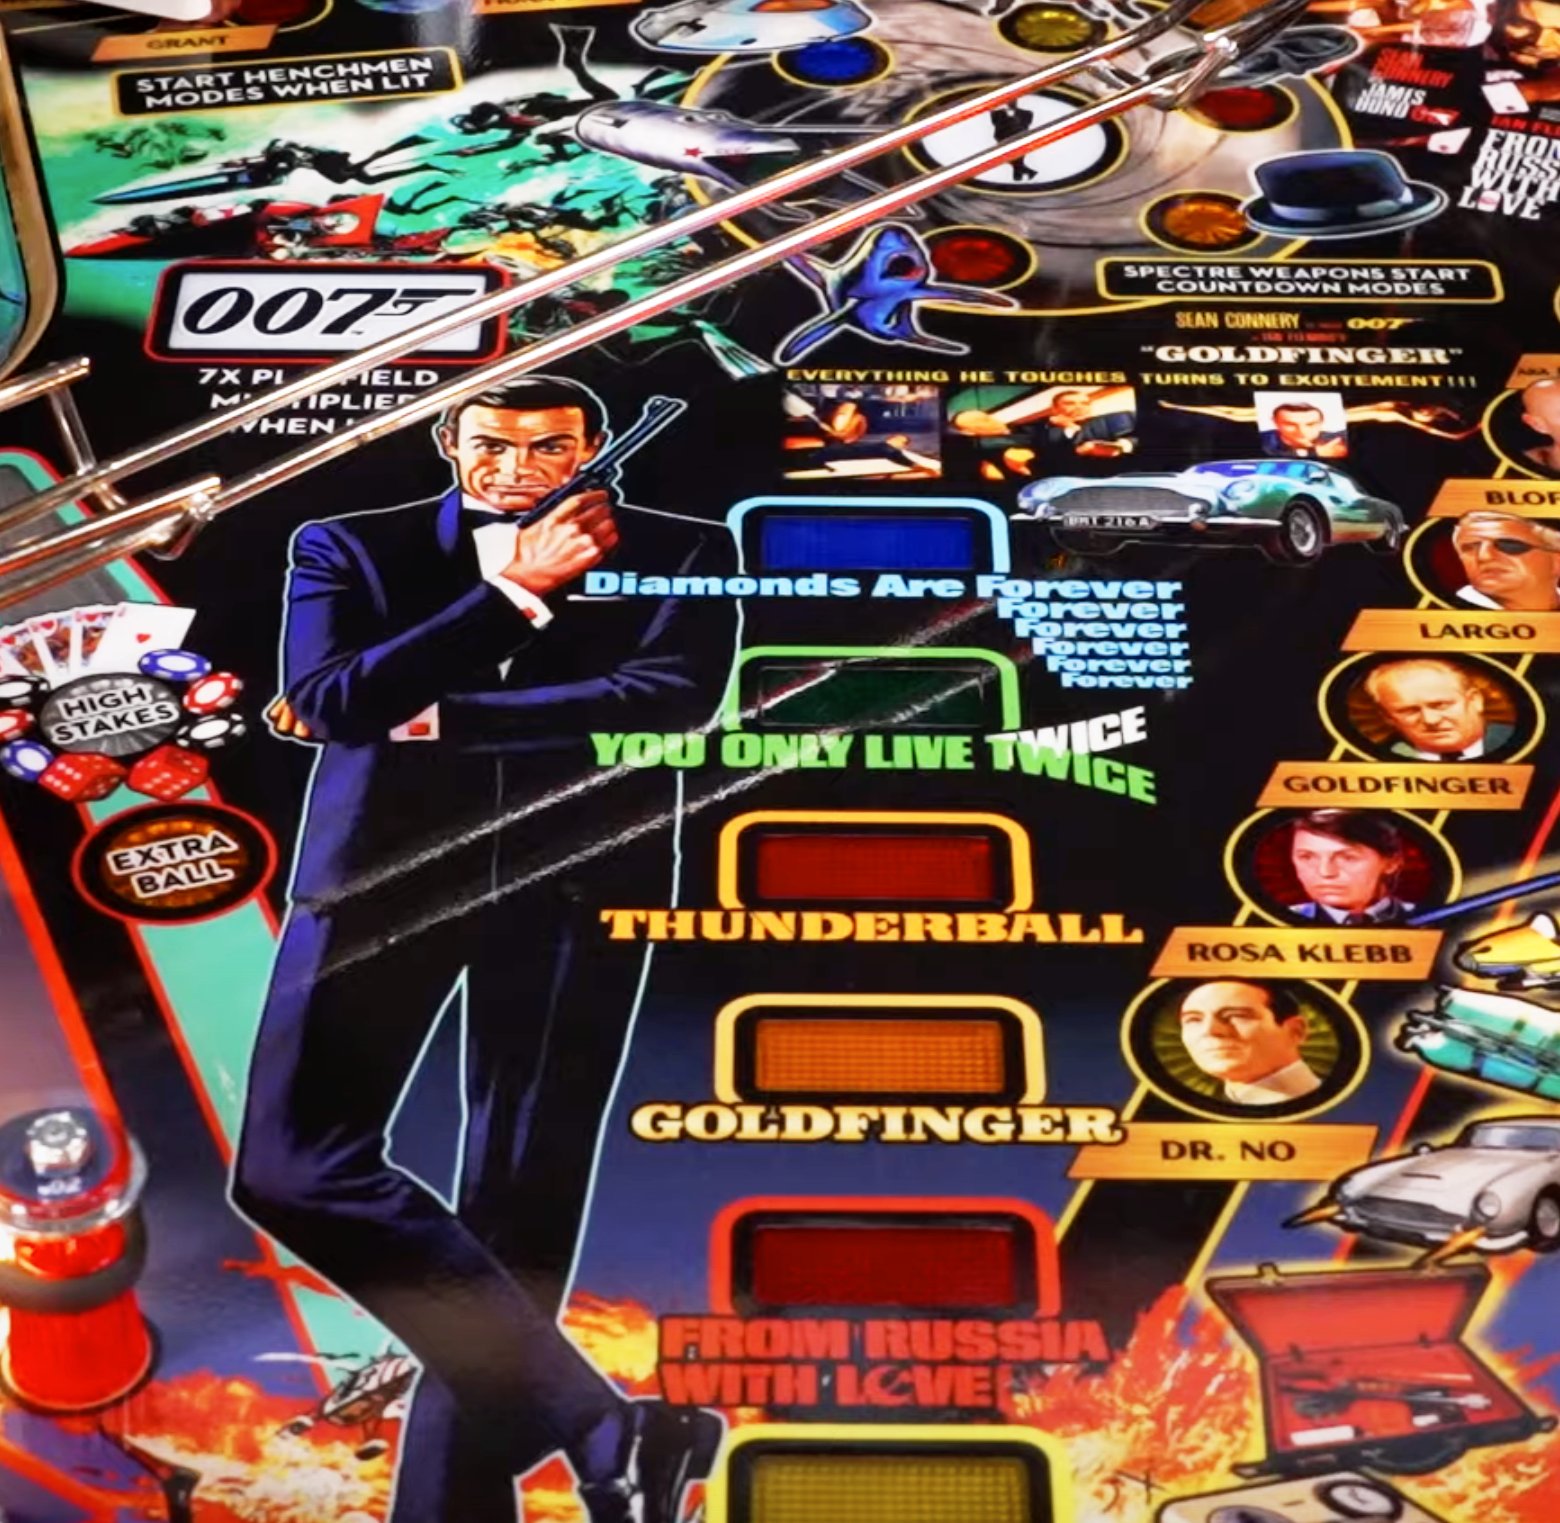 2022 James Bond Premium Edition Pinball Machine by Stern